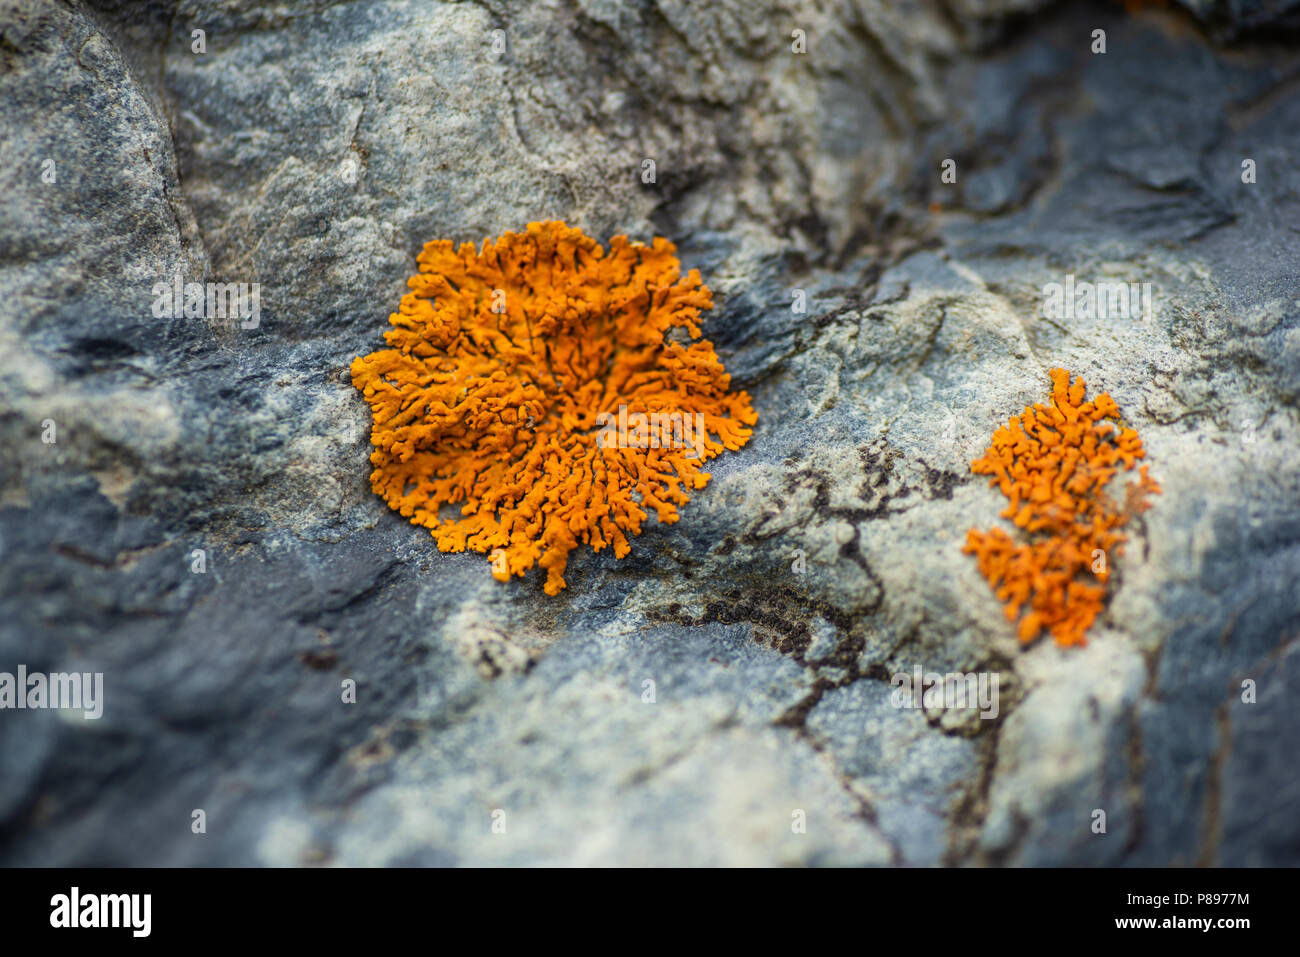 Elegant sunburst lichens on a patch of rock. Stock Photo